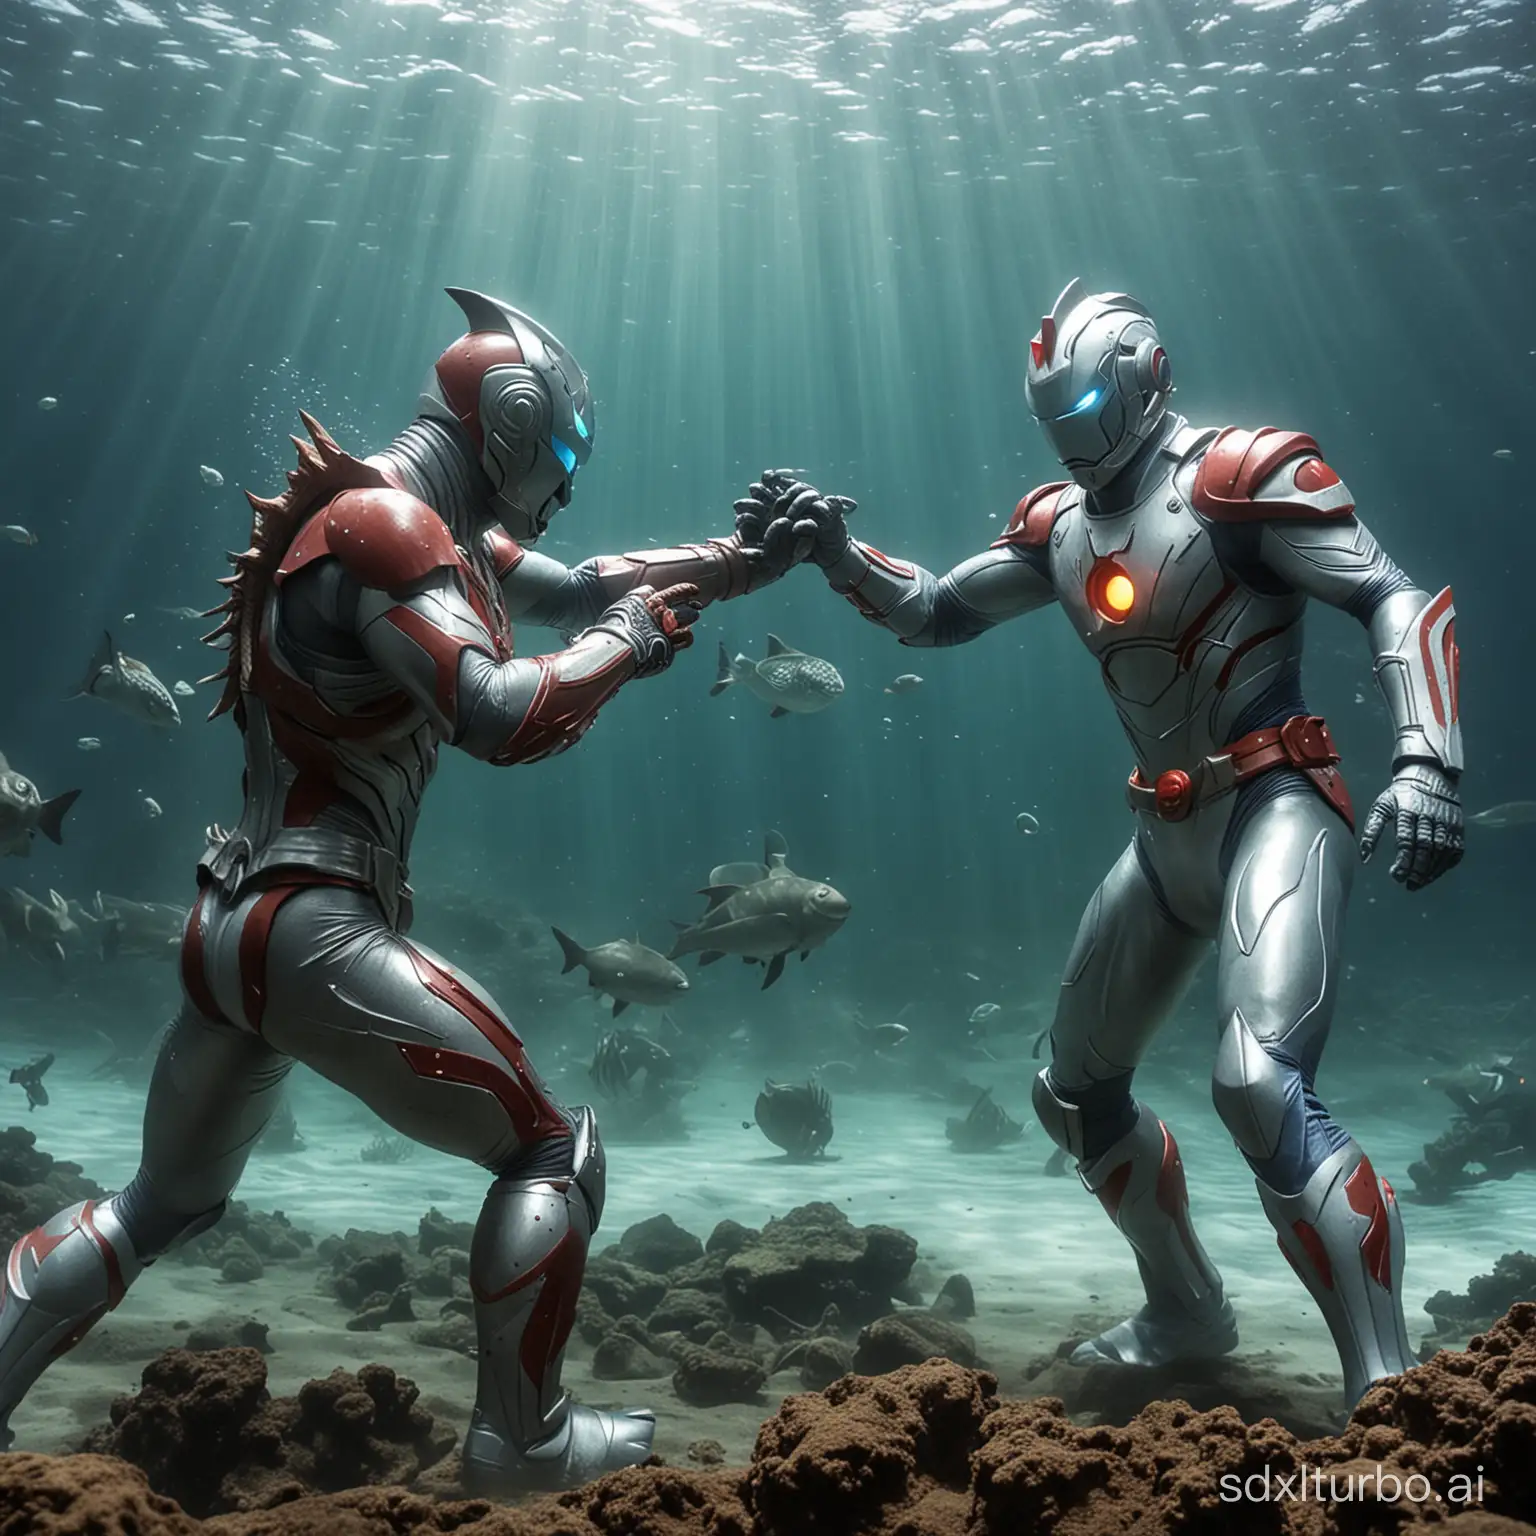 Epic-Battle-Ultraman-vs-Ledi-Under-the-Sea